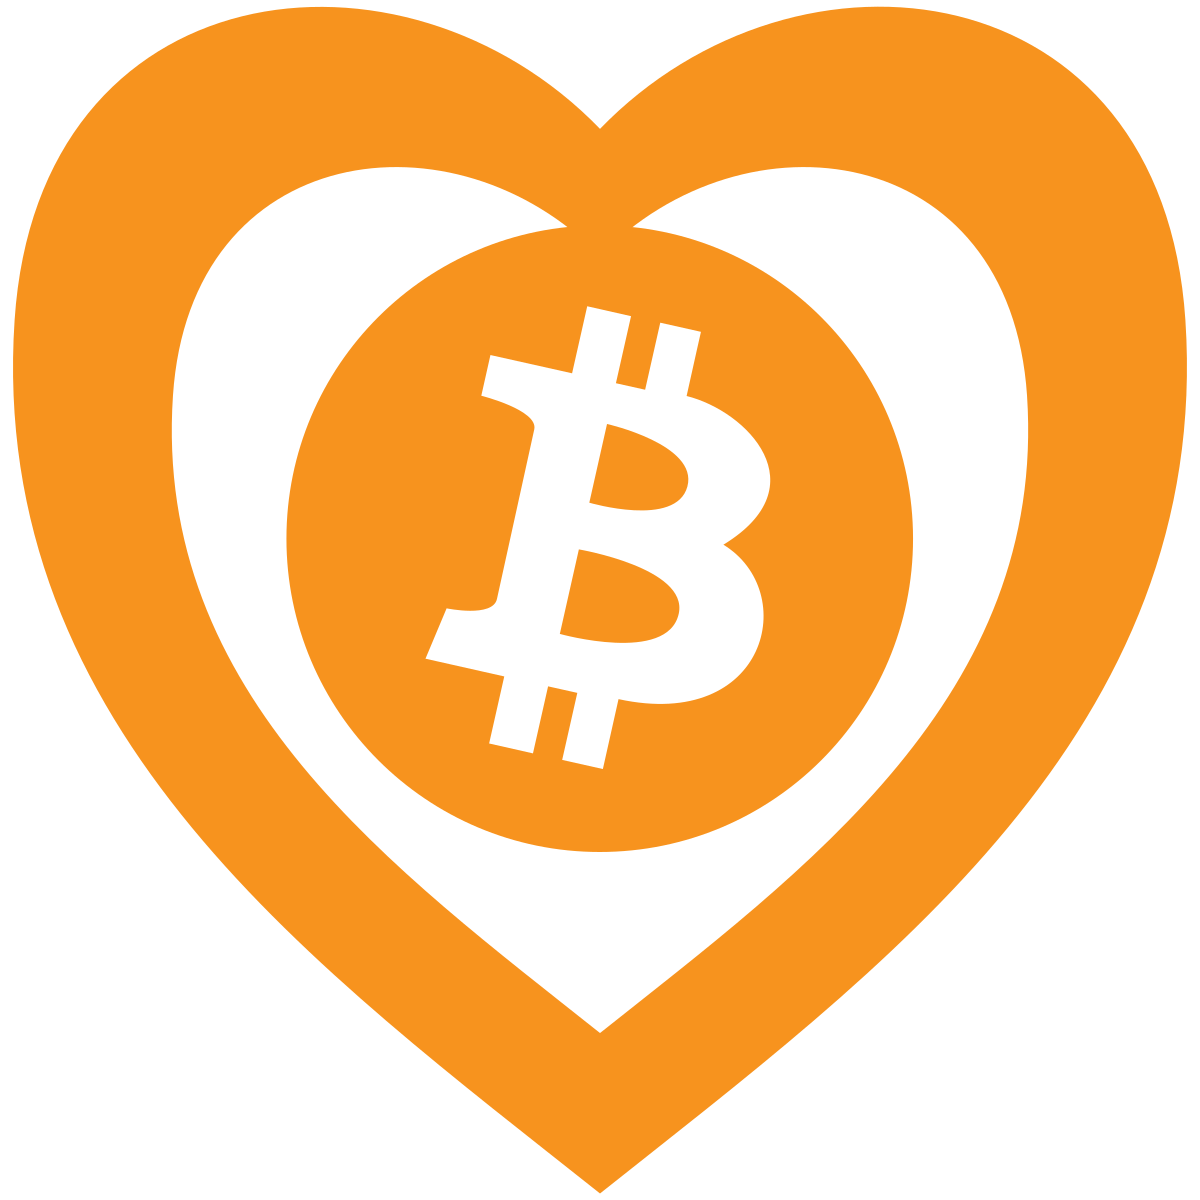 Download File:I Love Bitcoin icon.svg - Wikimedia Commons